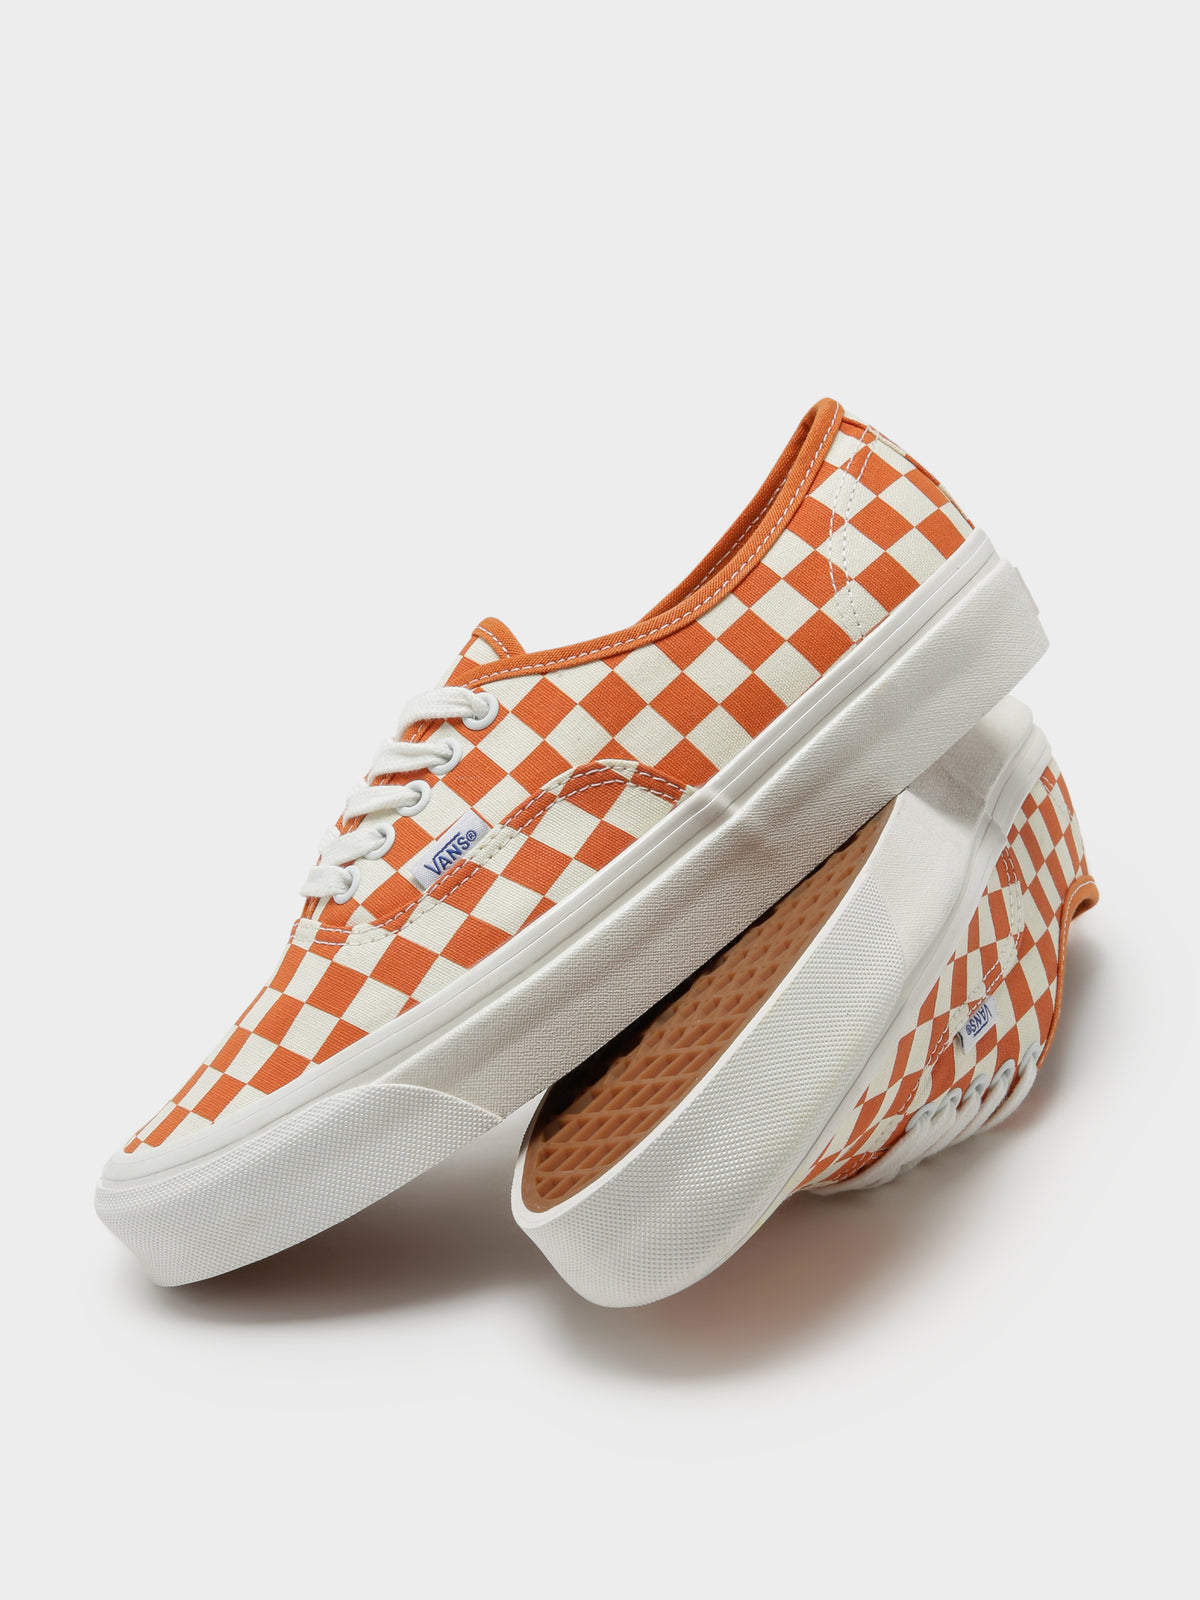 Unisex Authentic DX Anaheim Factory Sneakers in Checkerboard Burnt Orange